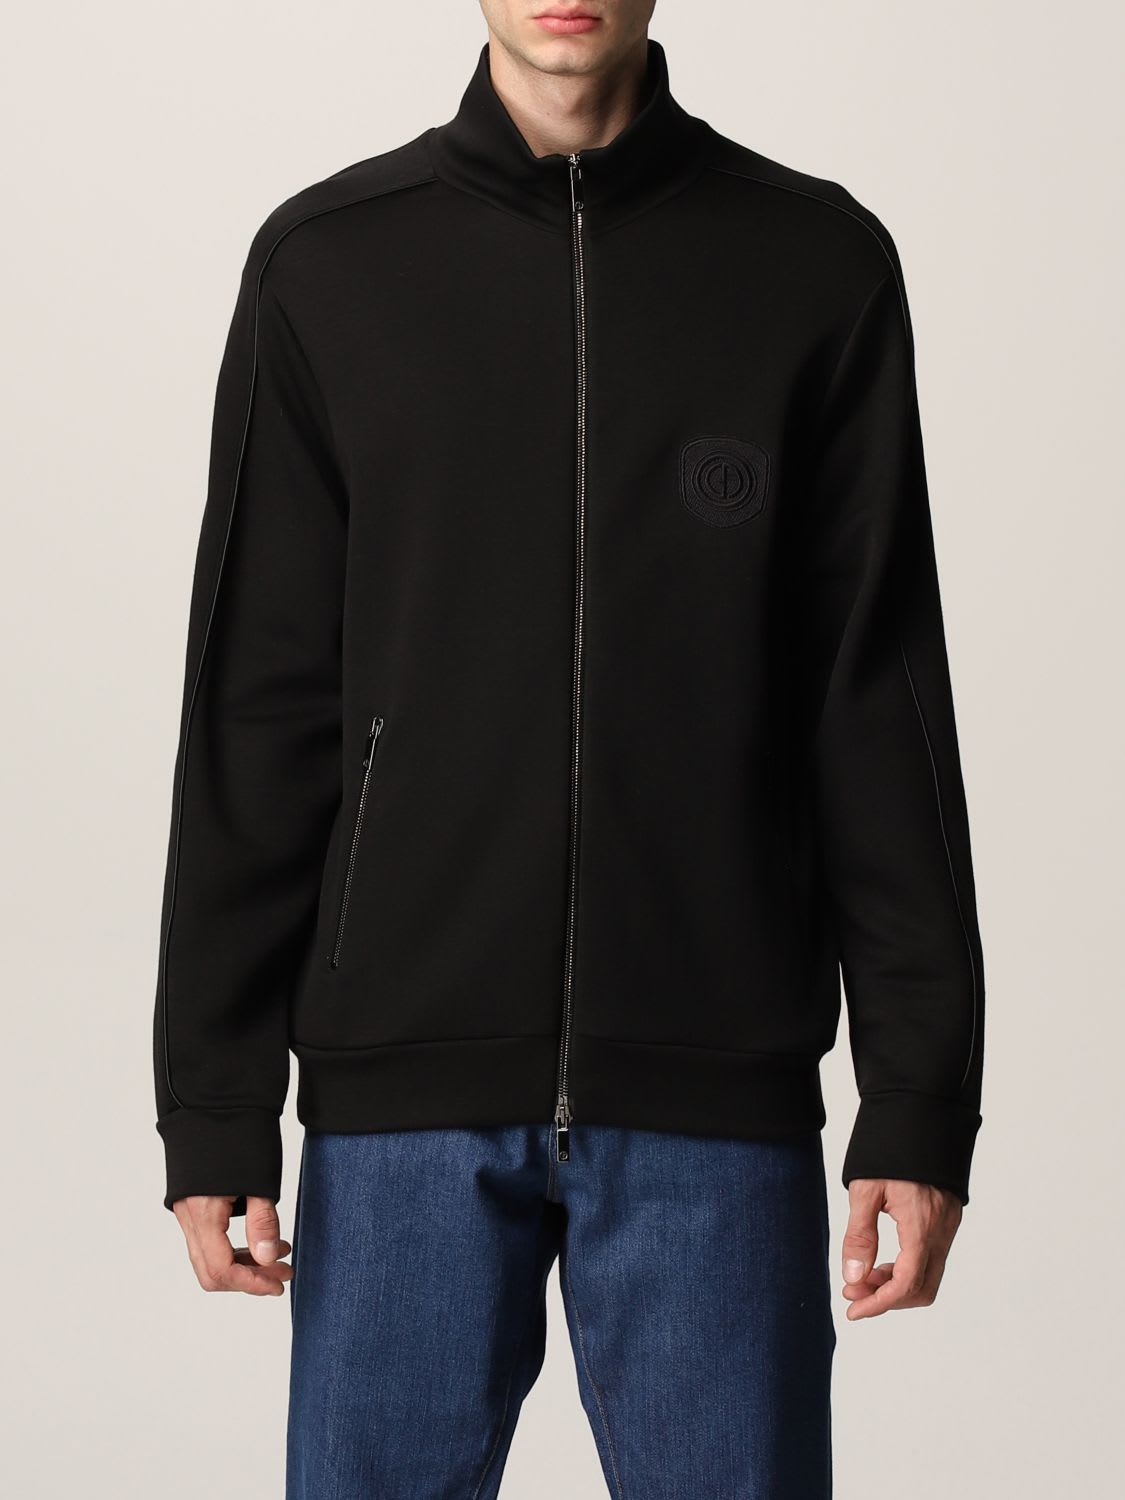 Giorgio Armani Sweatshirt Giorgio Armani Sweatshirt With Zip In Modal Blend